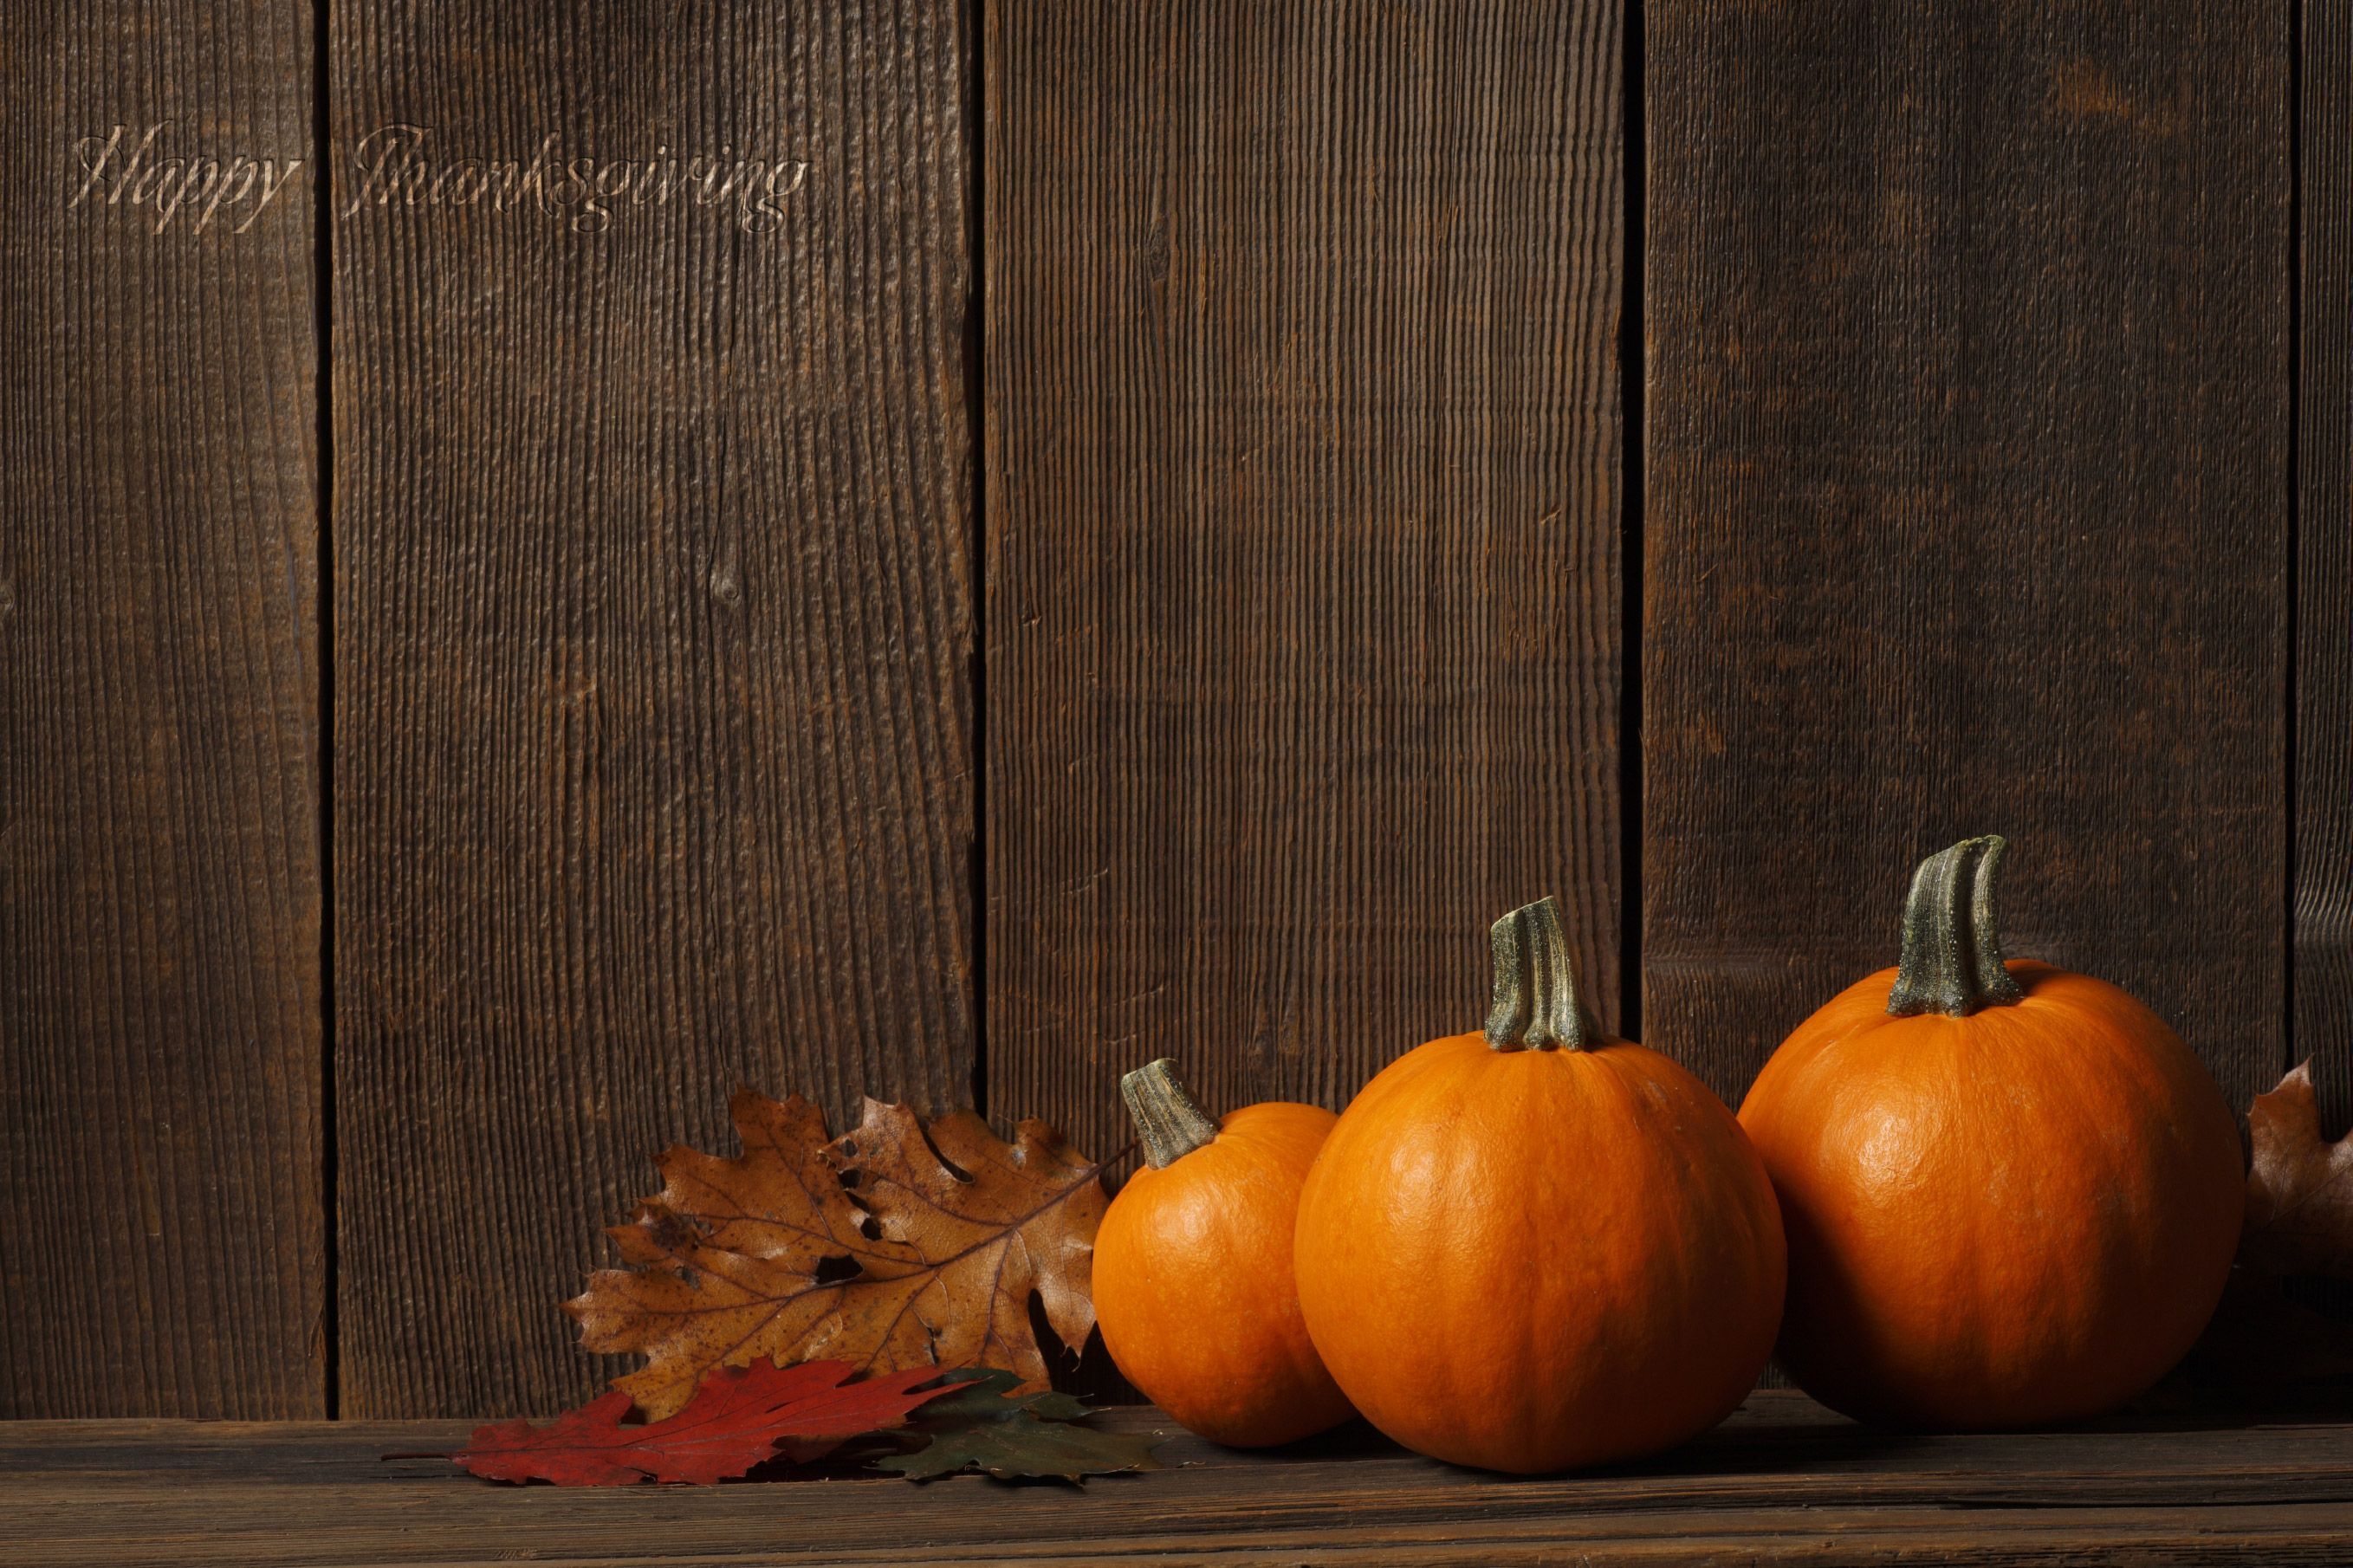 Wallpaper Roundup: Turkey Time and Pumpkin Pie